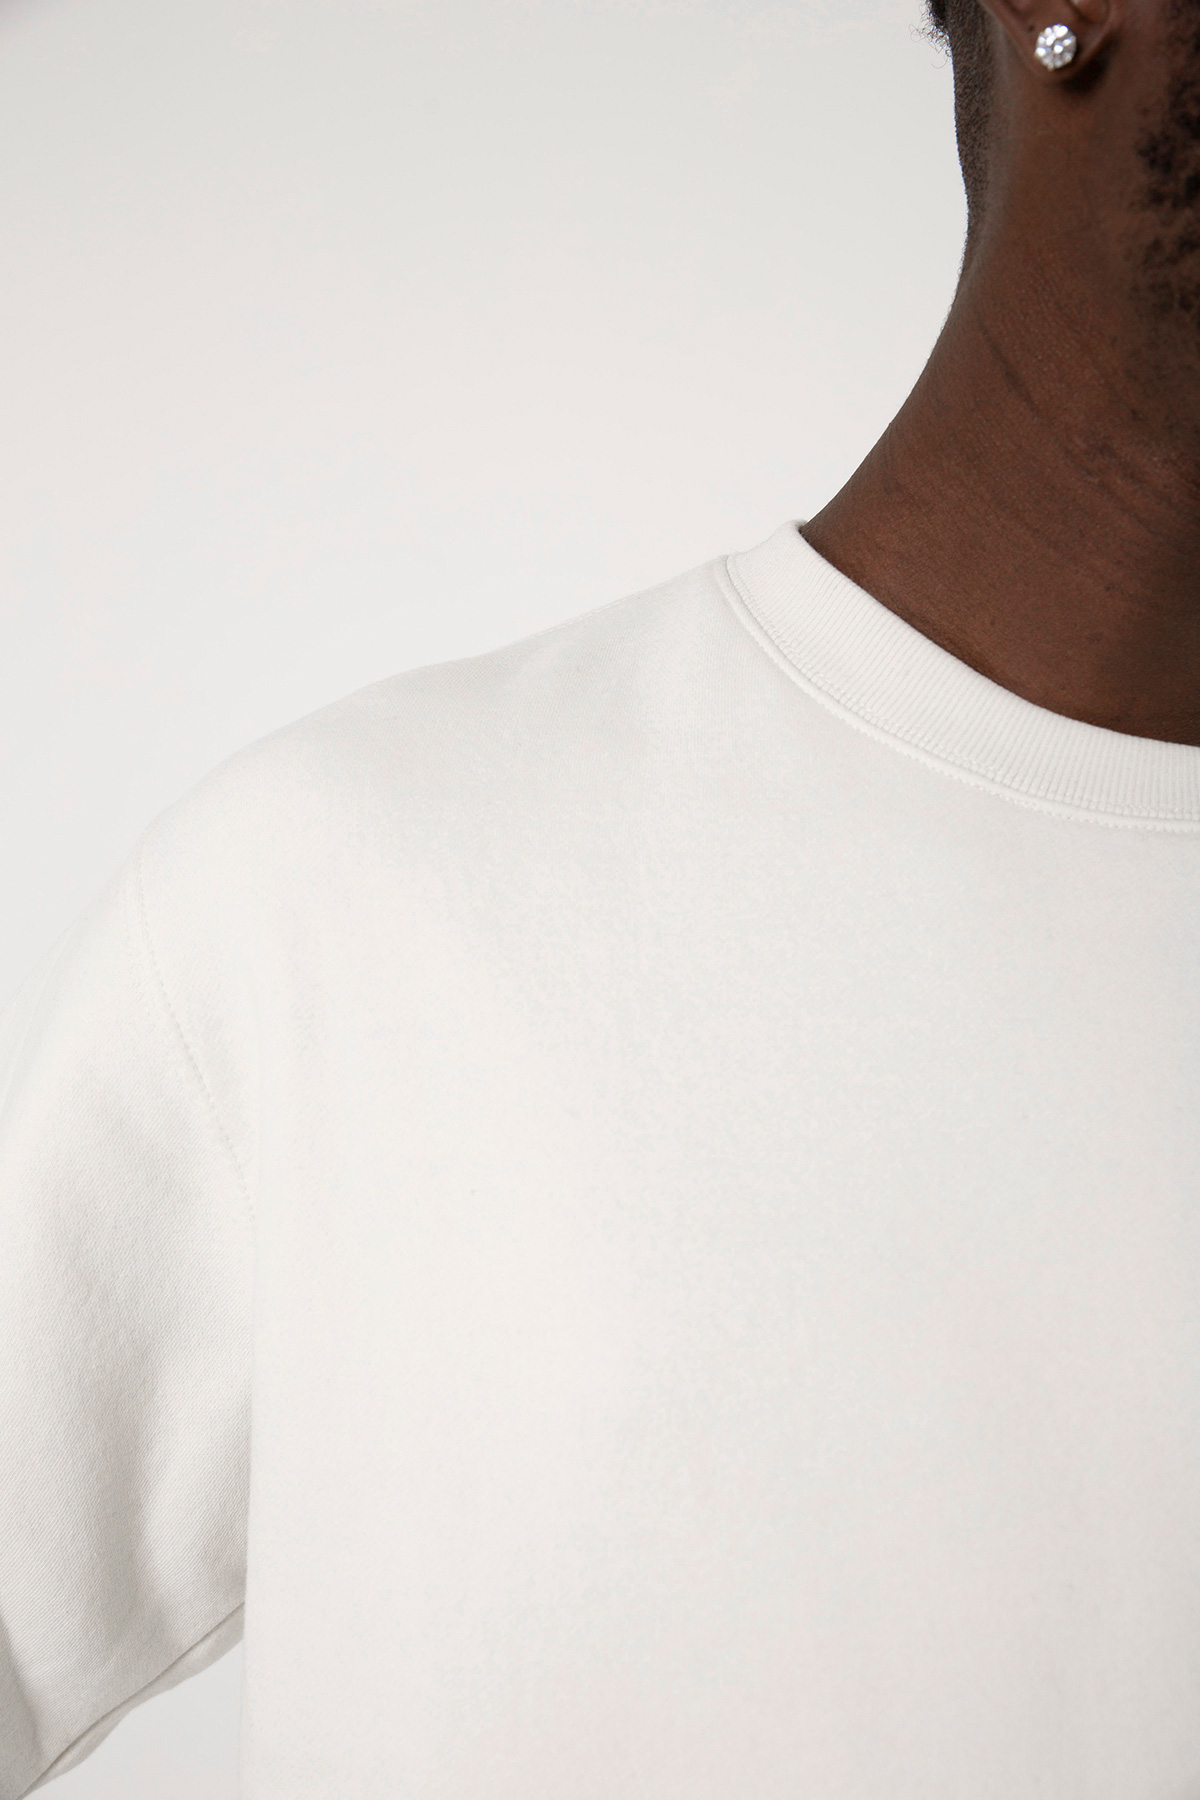 Sense8 Sensates Cluster Beyaz Erkek 2ip Sweatshirt